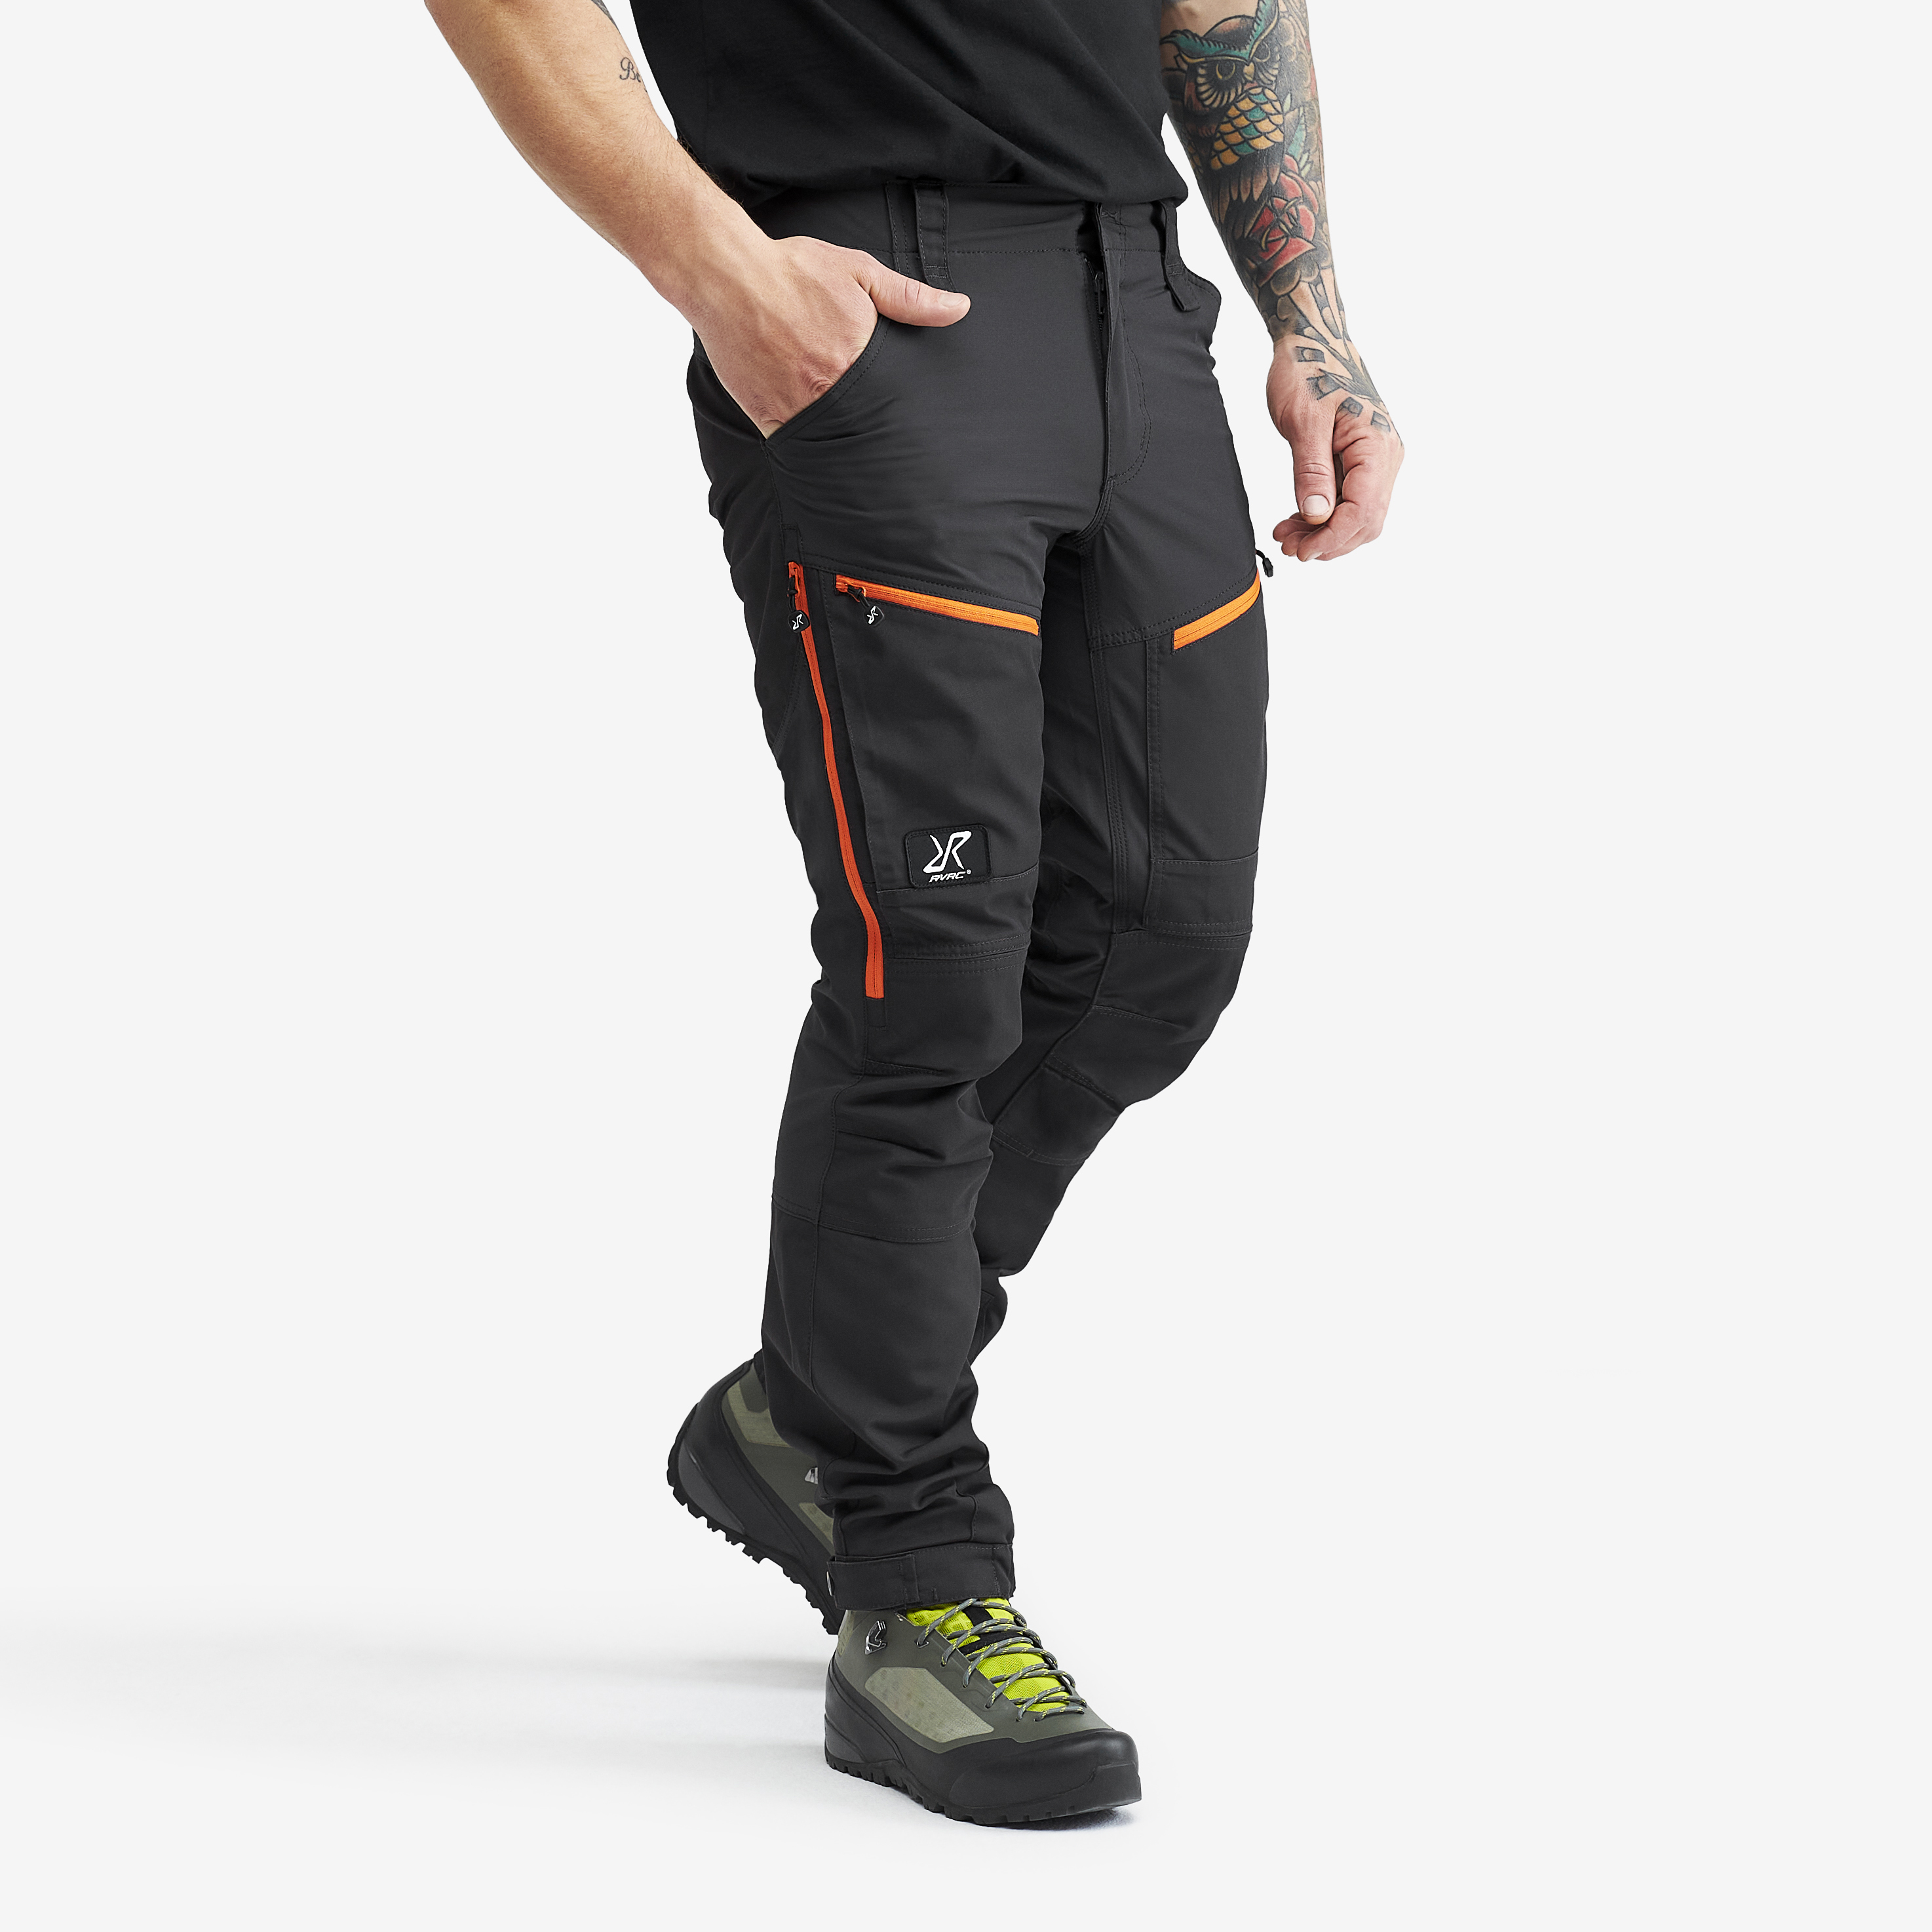 RVRC GP Pro Short Trousers Grey/Orange Men